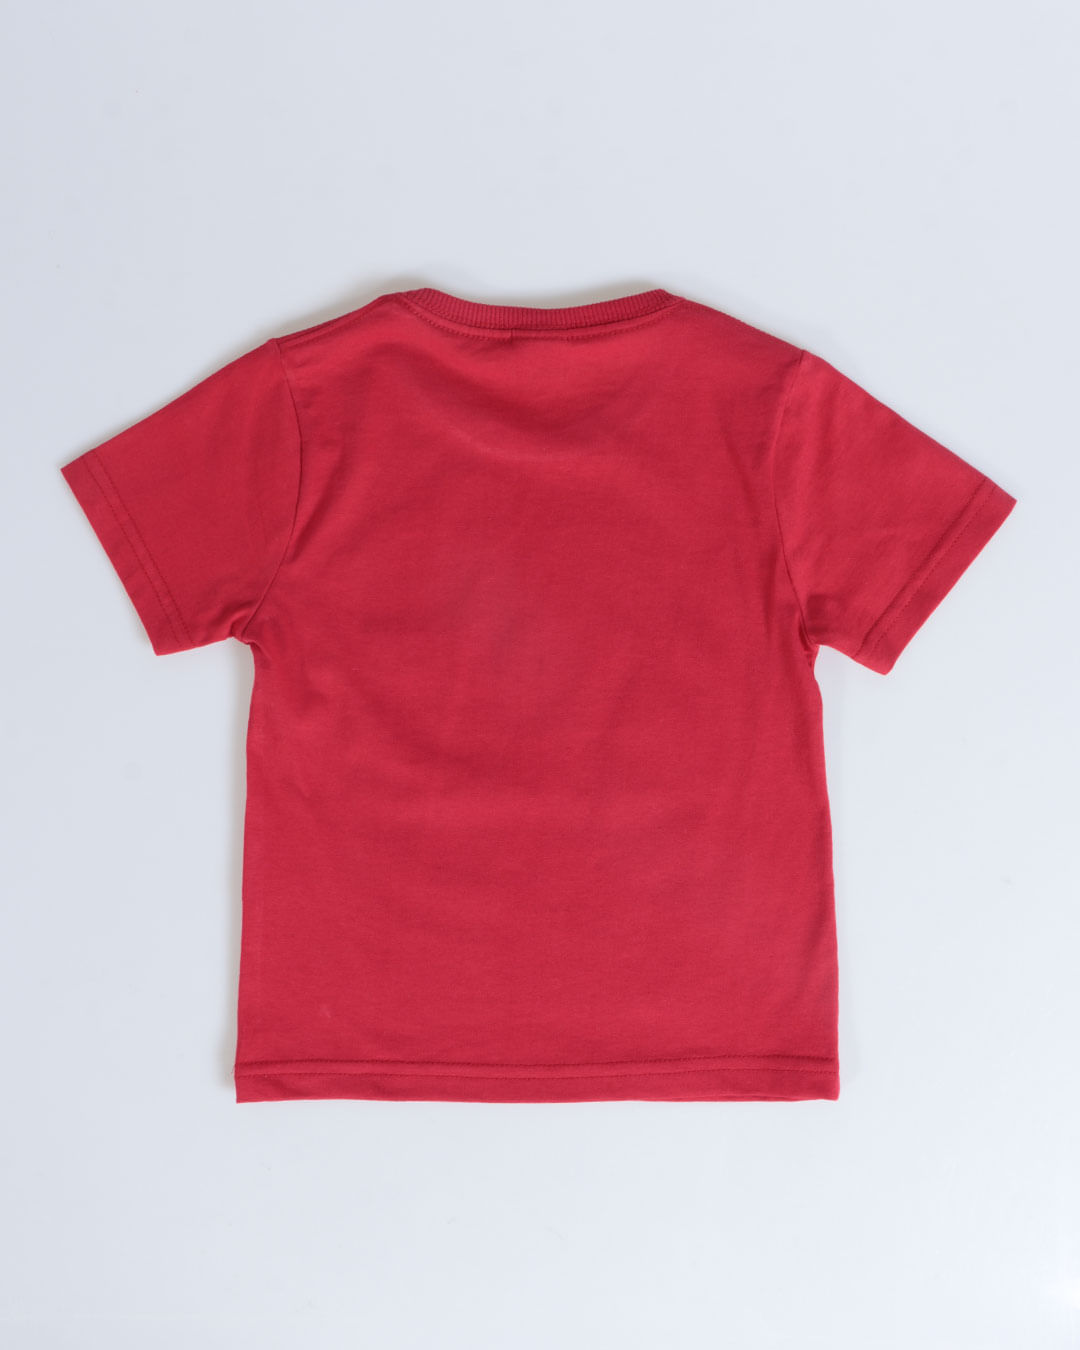 Camiseta Infantil Homem Aranha Marvel Vermelho